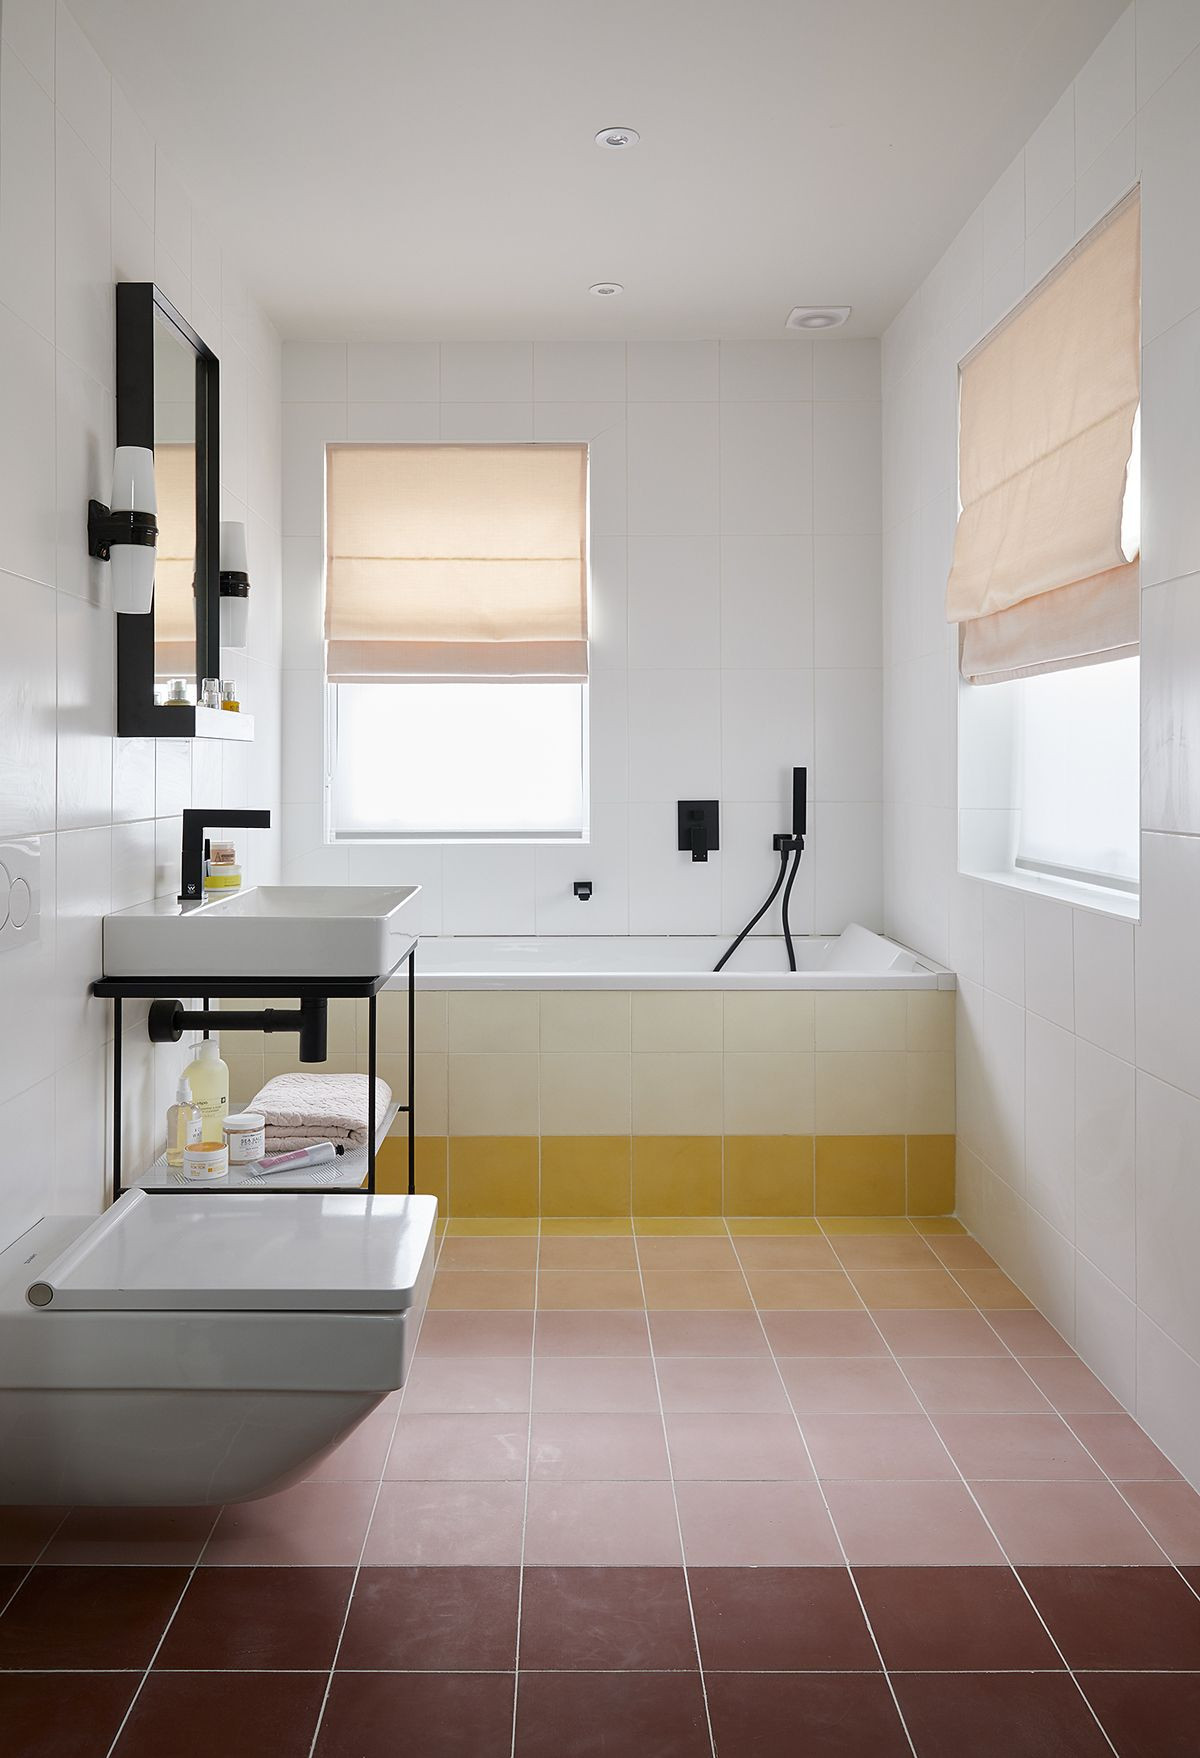 12X24 Tile In Small Bathroom
 12X24 Tile In A Small Bathroom bathroomtileub